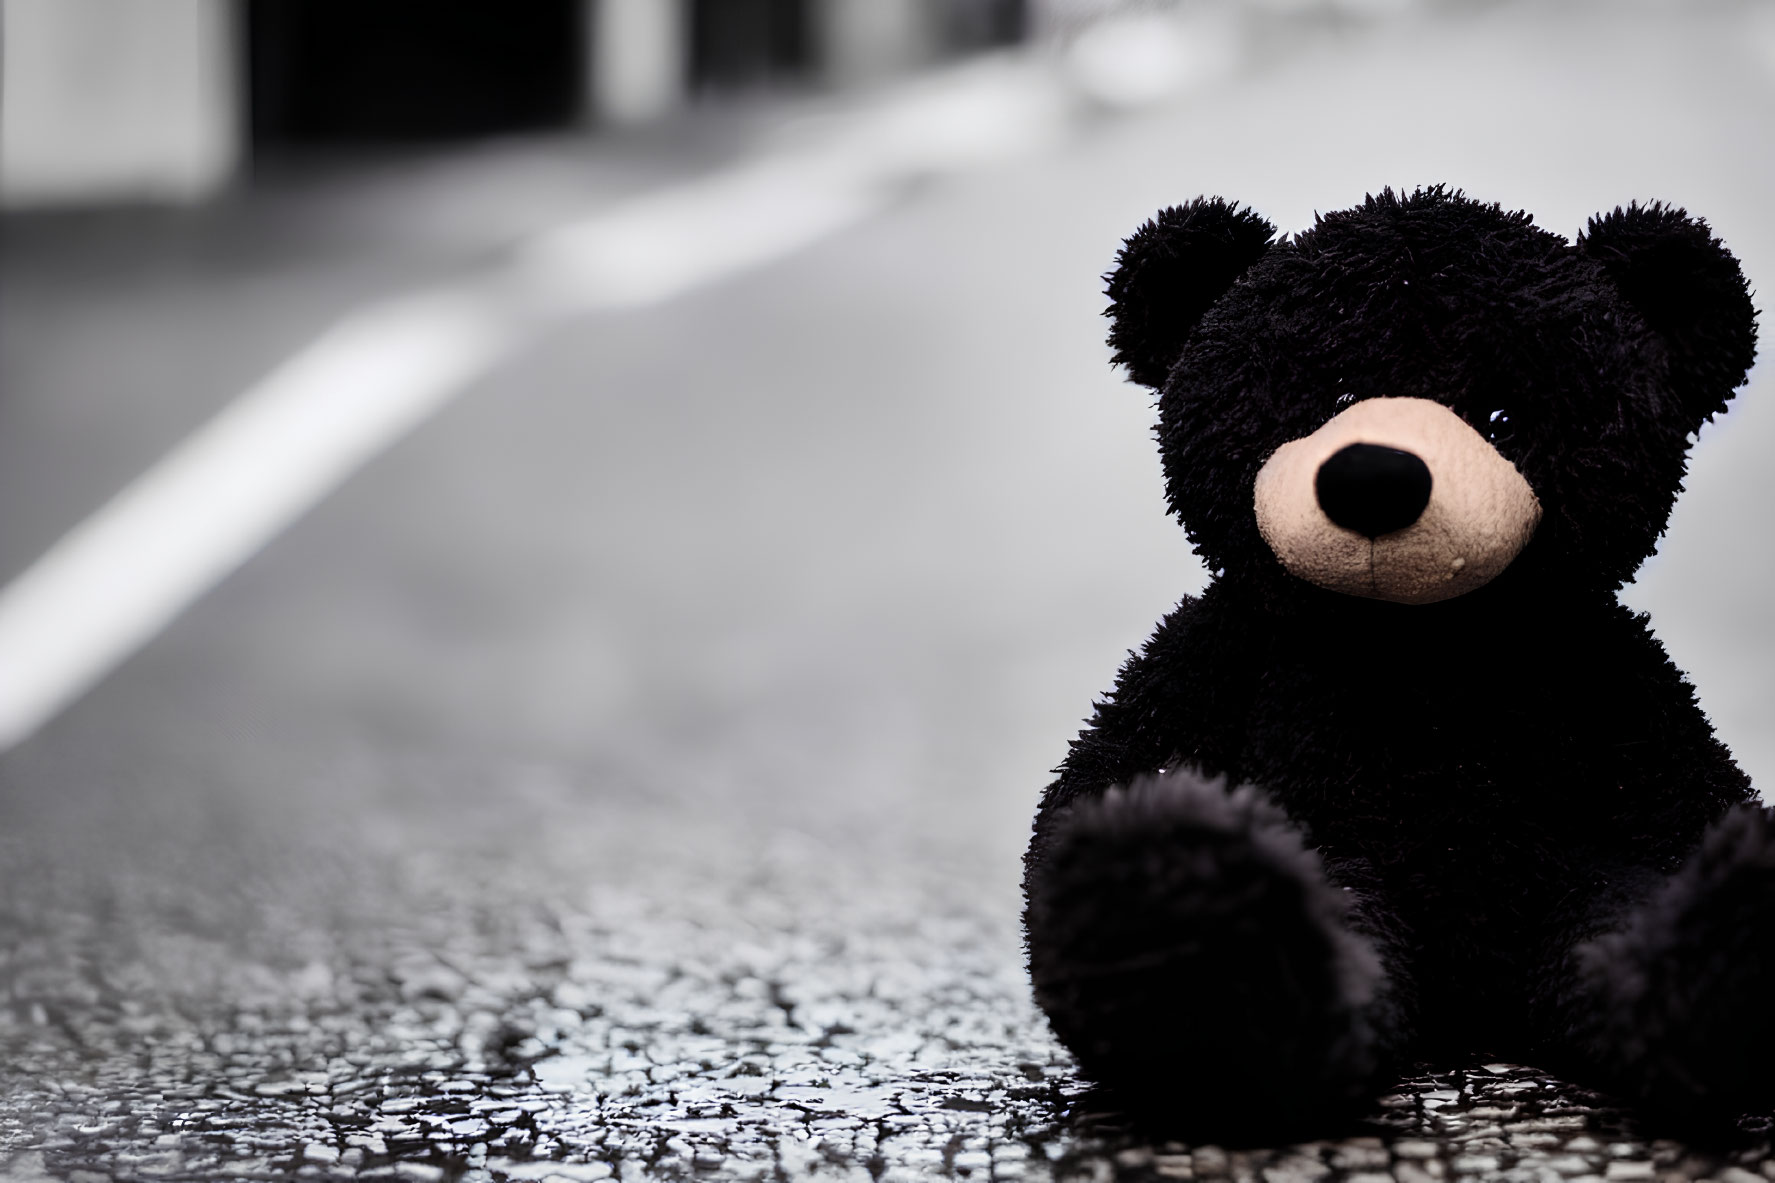 Black plush teddy bear on wet asphalt road with white road markings